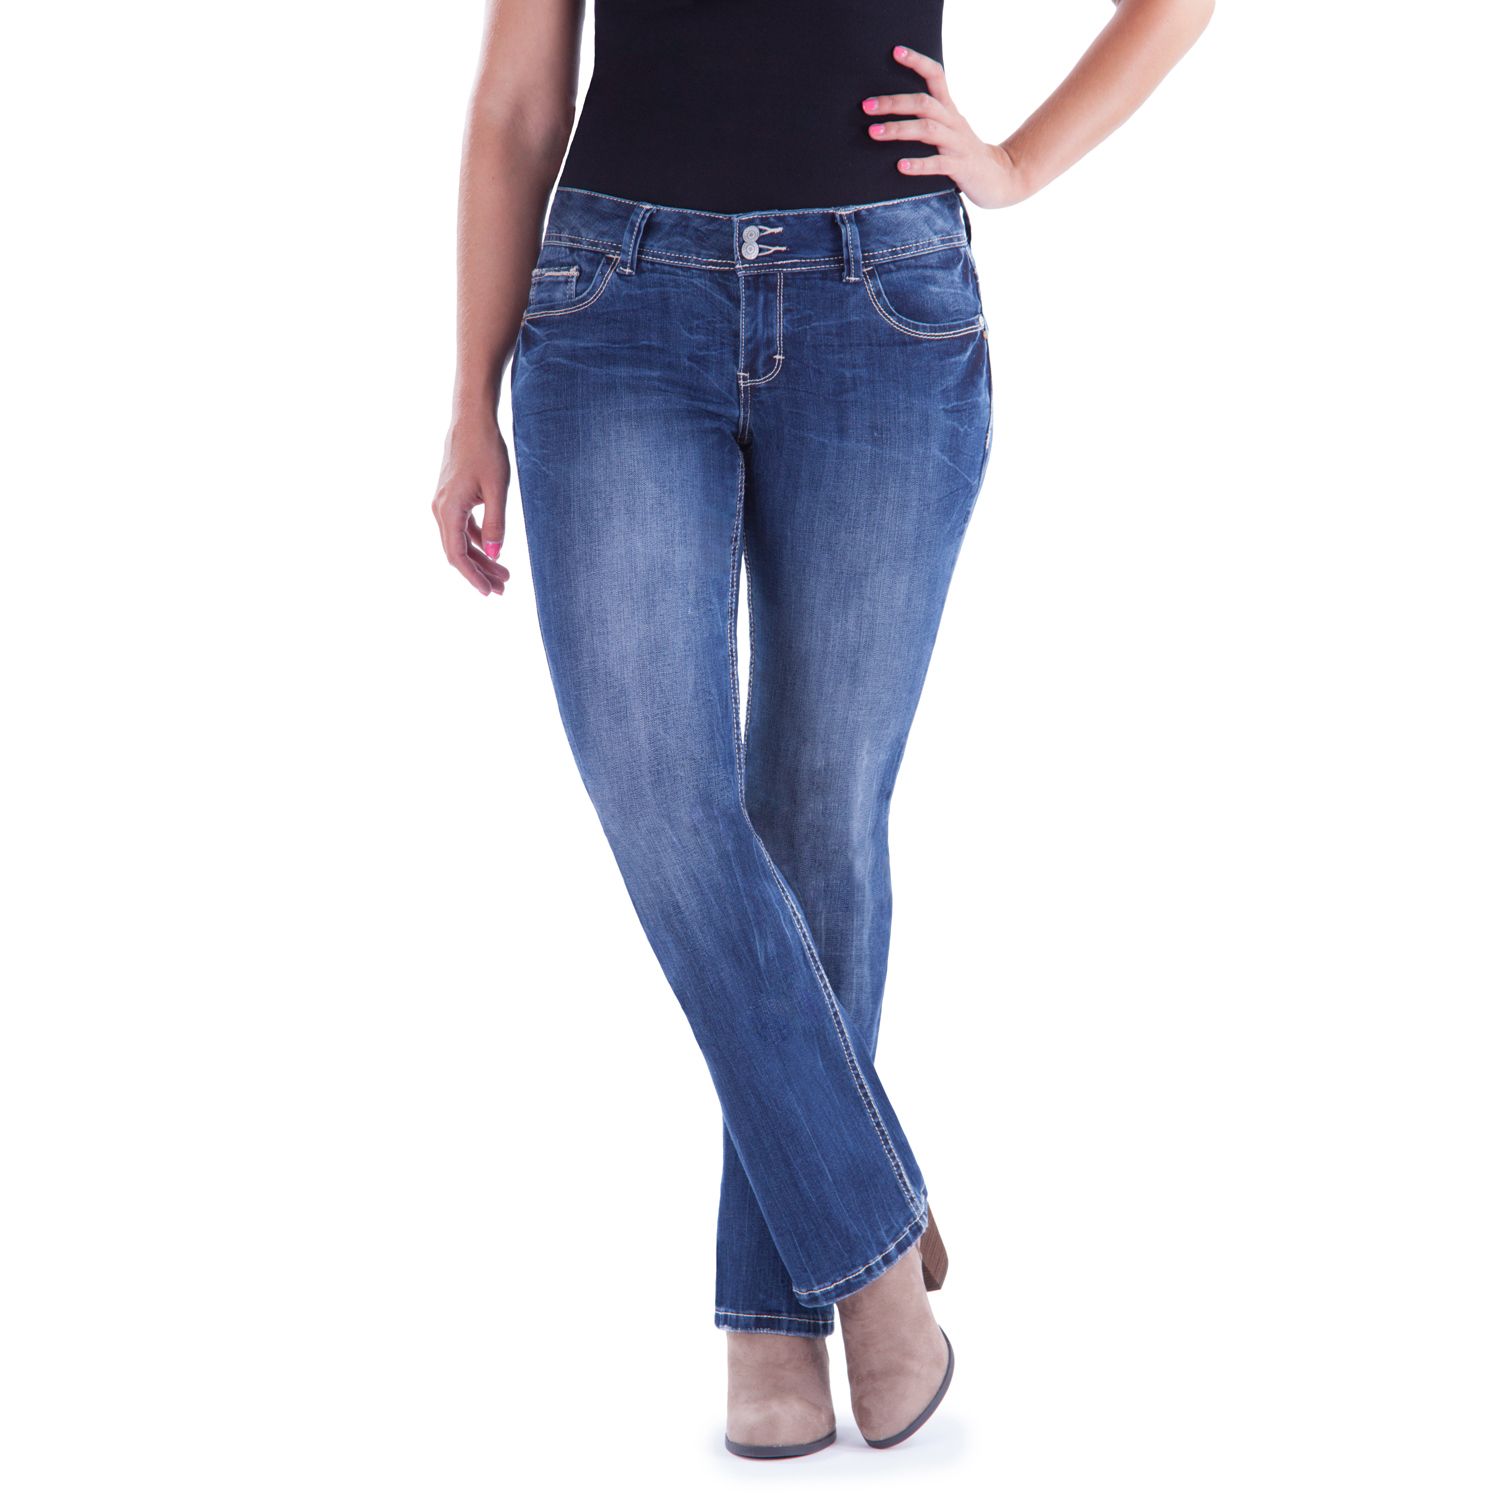 amethyst jeans plus size amazon